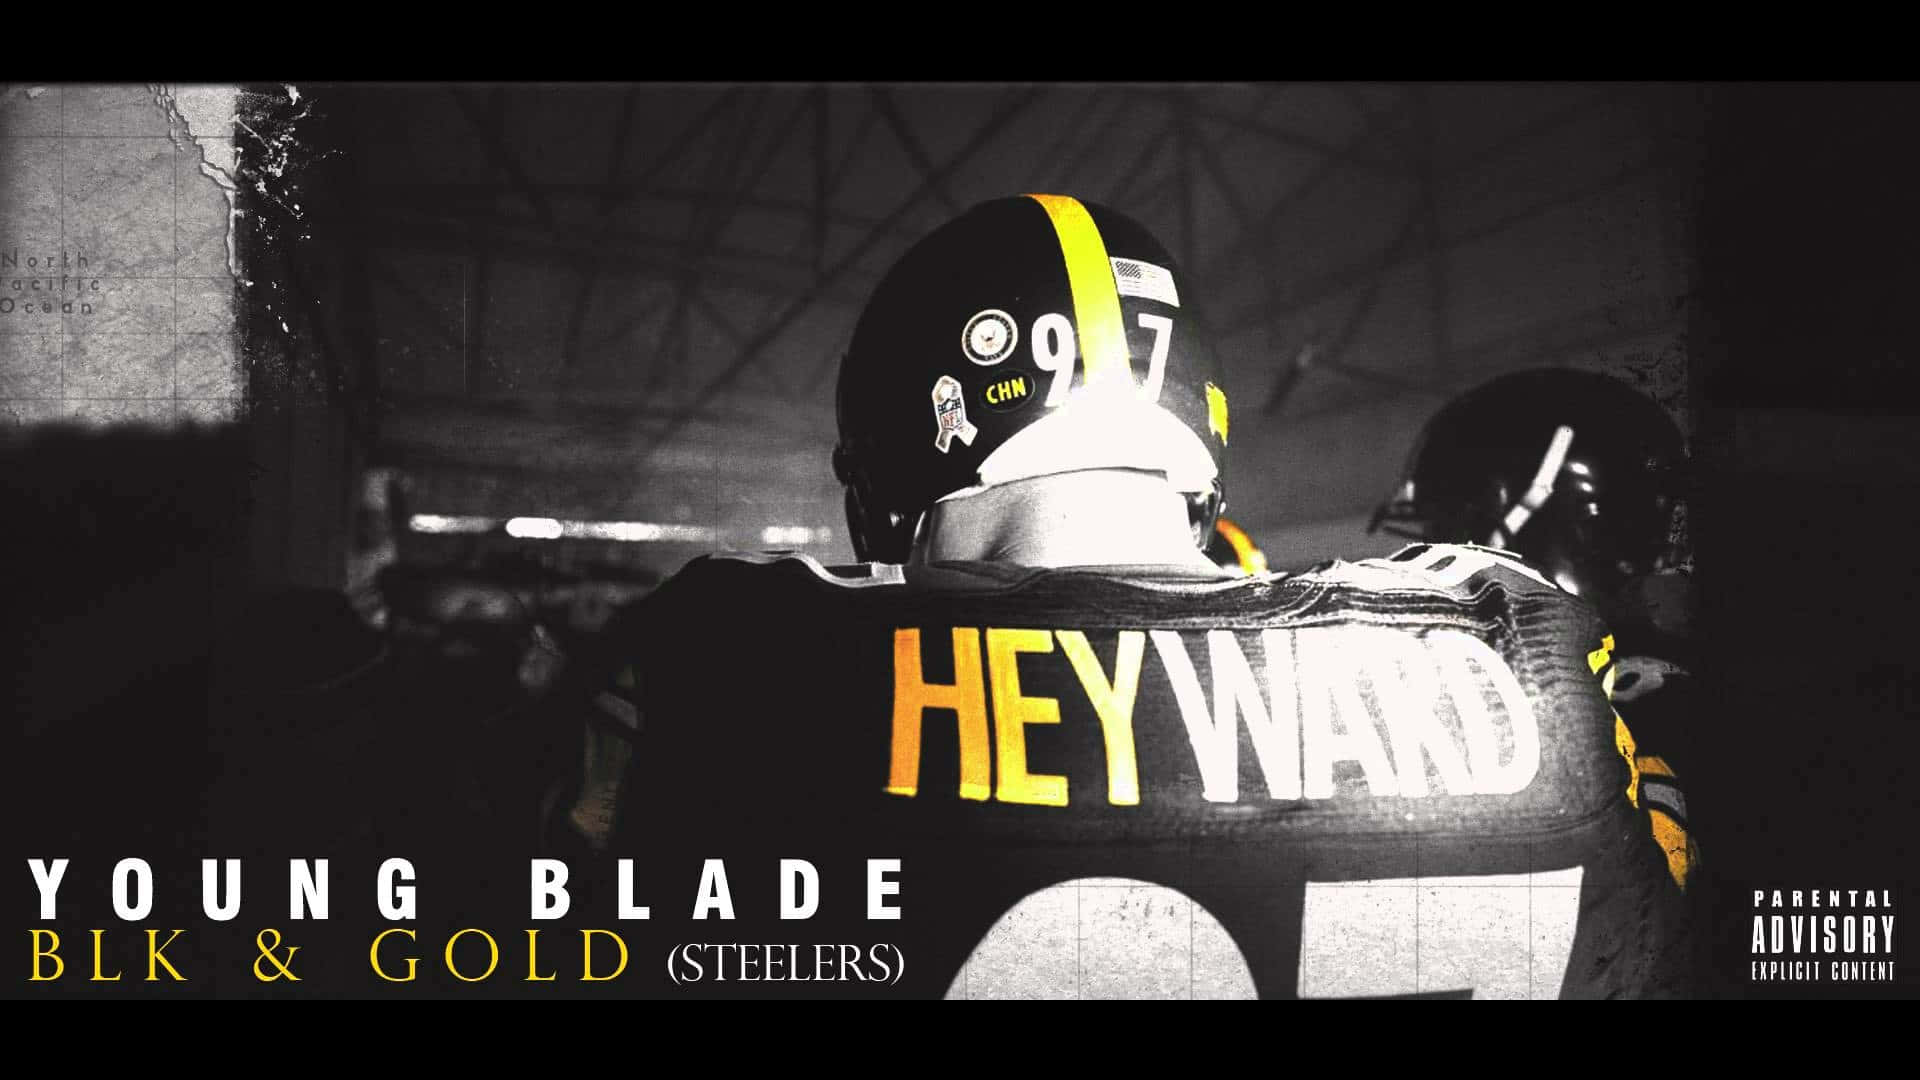 Hintergrundbildder Steelers